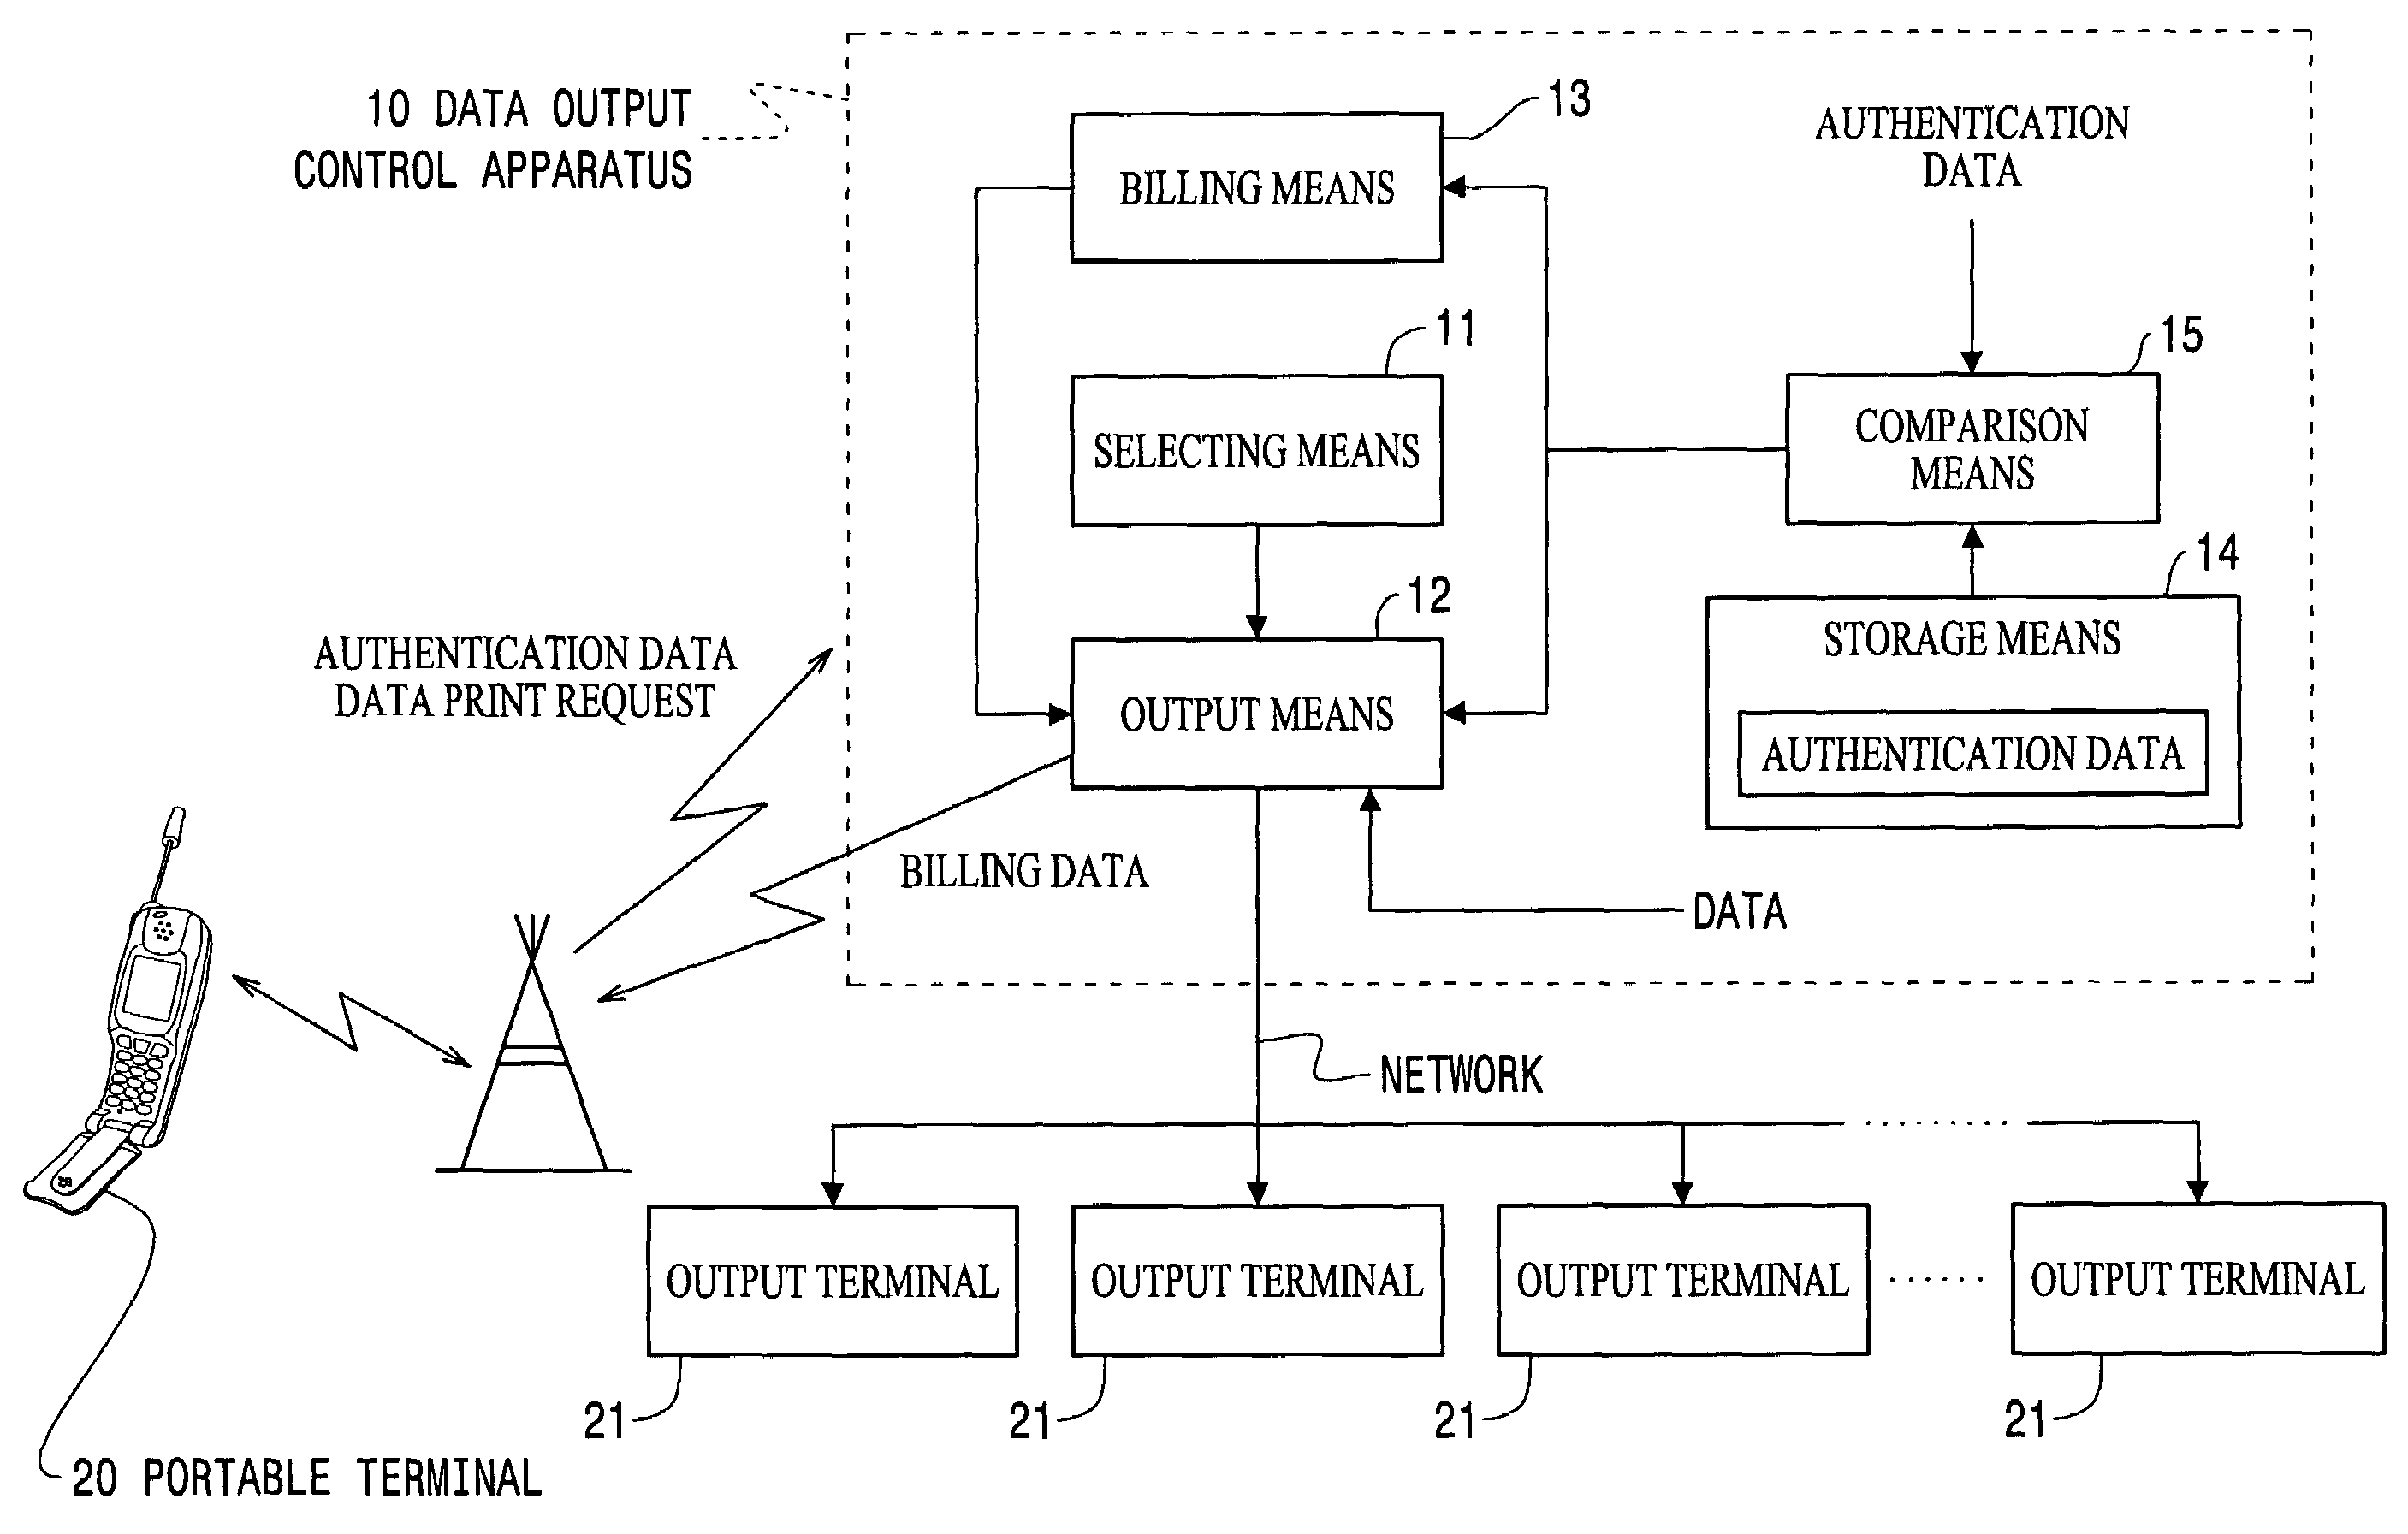 Data output control apparatus